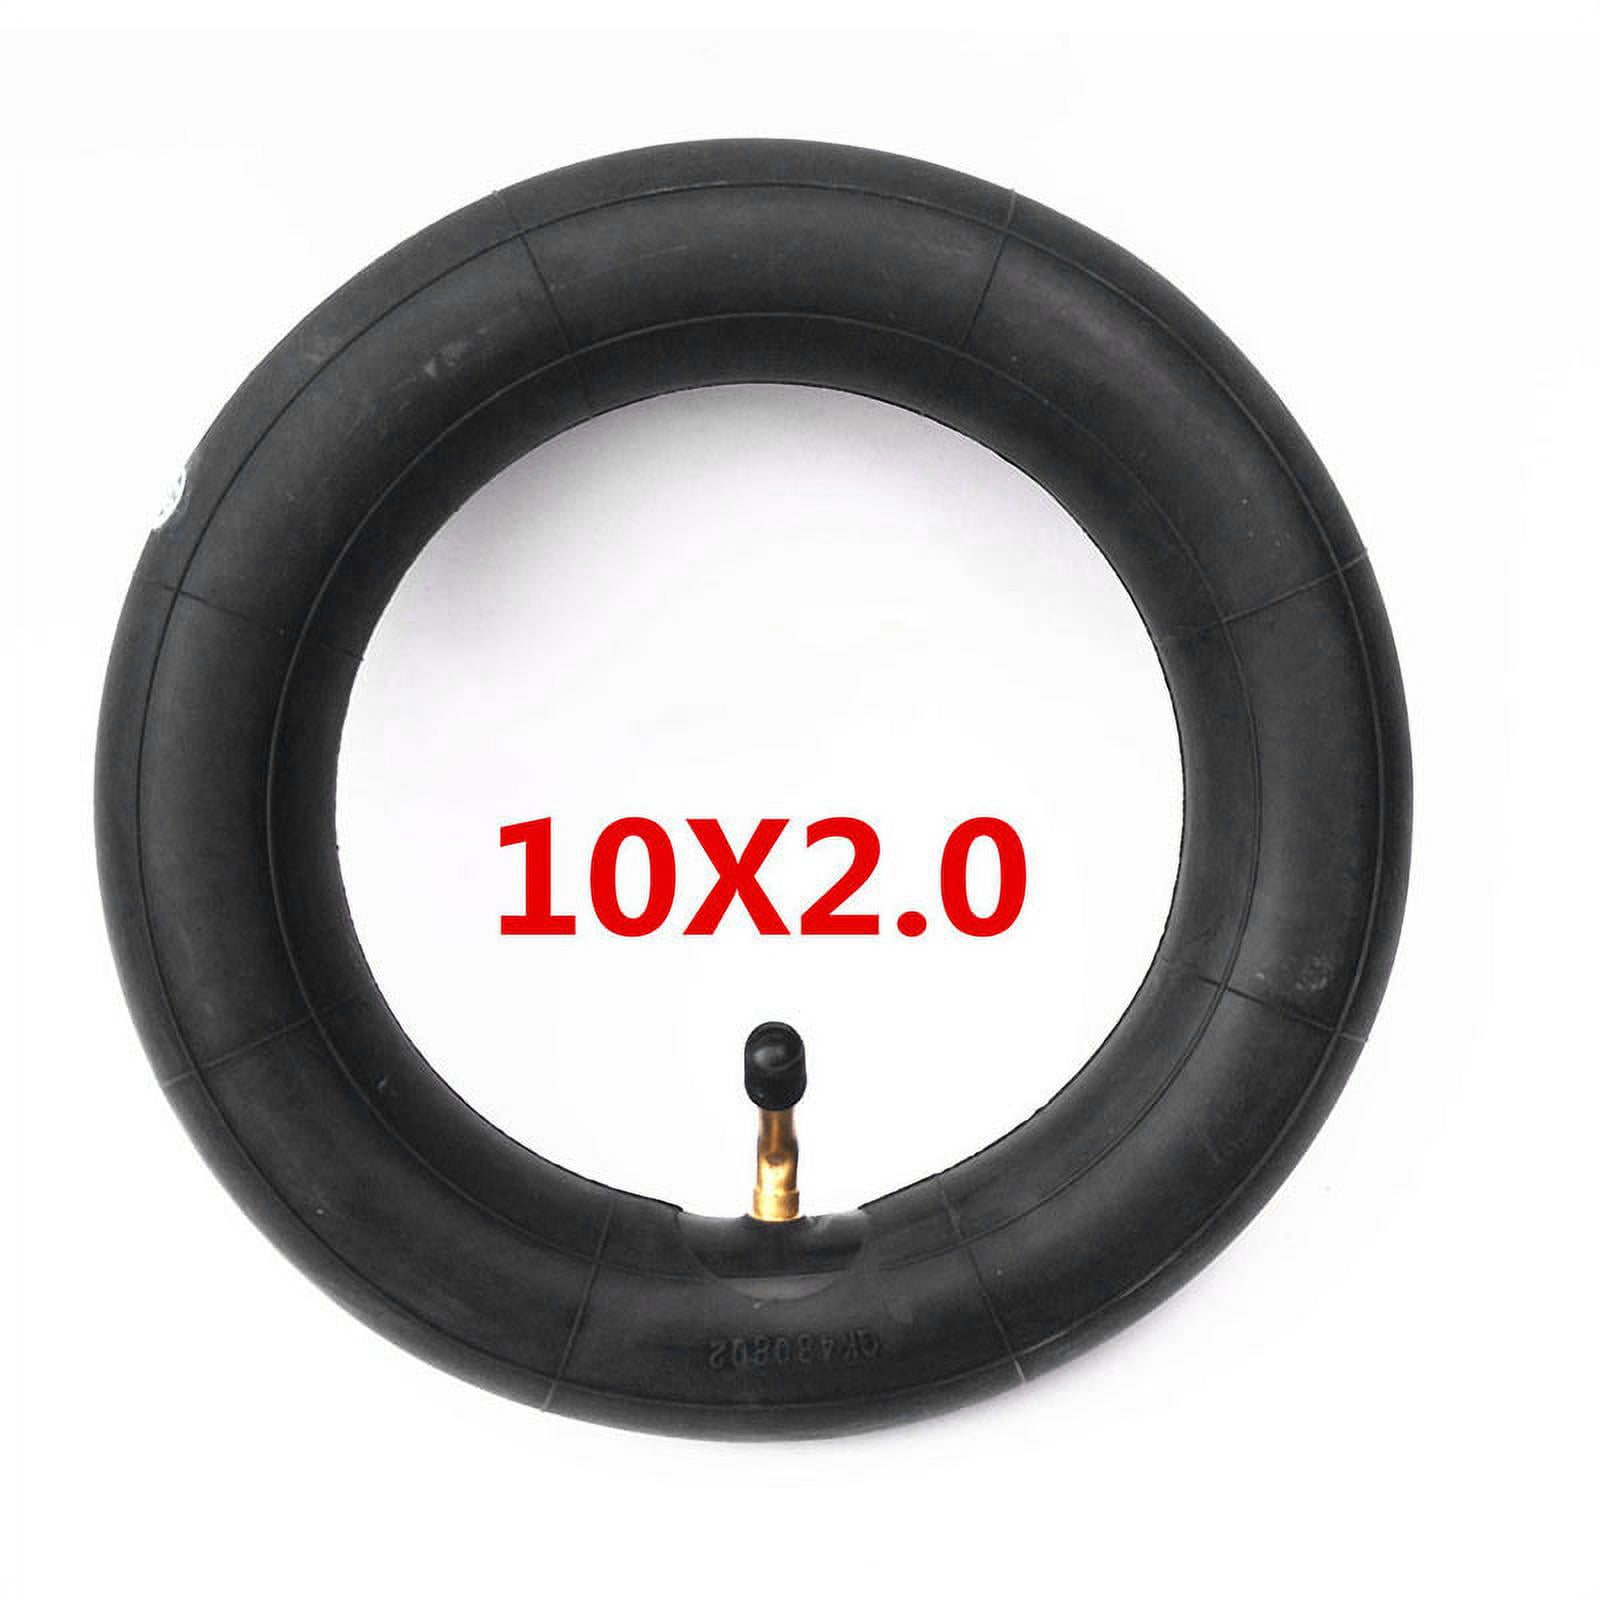 wassen Exclusief gazon QXKE 10*2.0 (10*2.125) Inner Tube for Baby Carriages Kid Bikes Wheel Tire  Accessories - Walmart.com